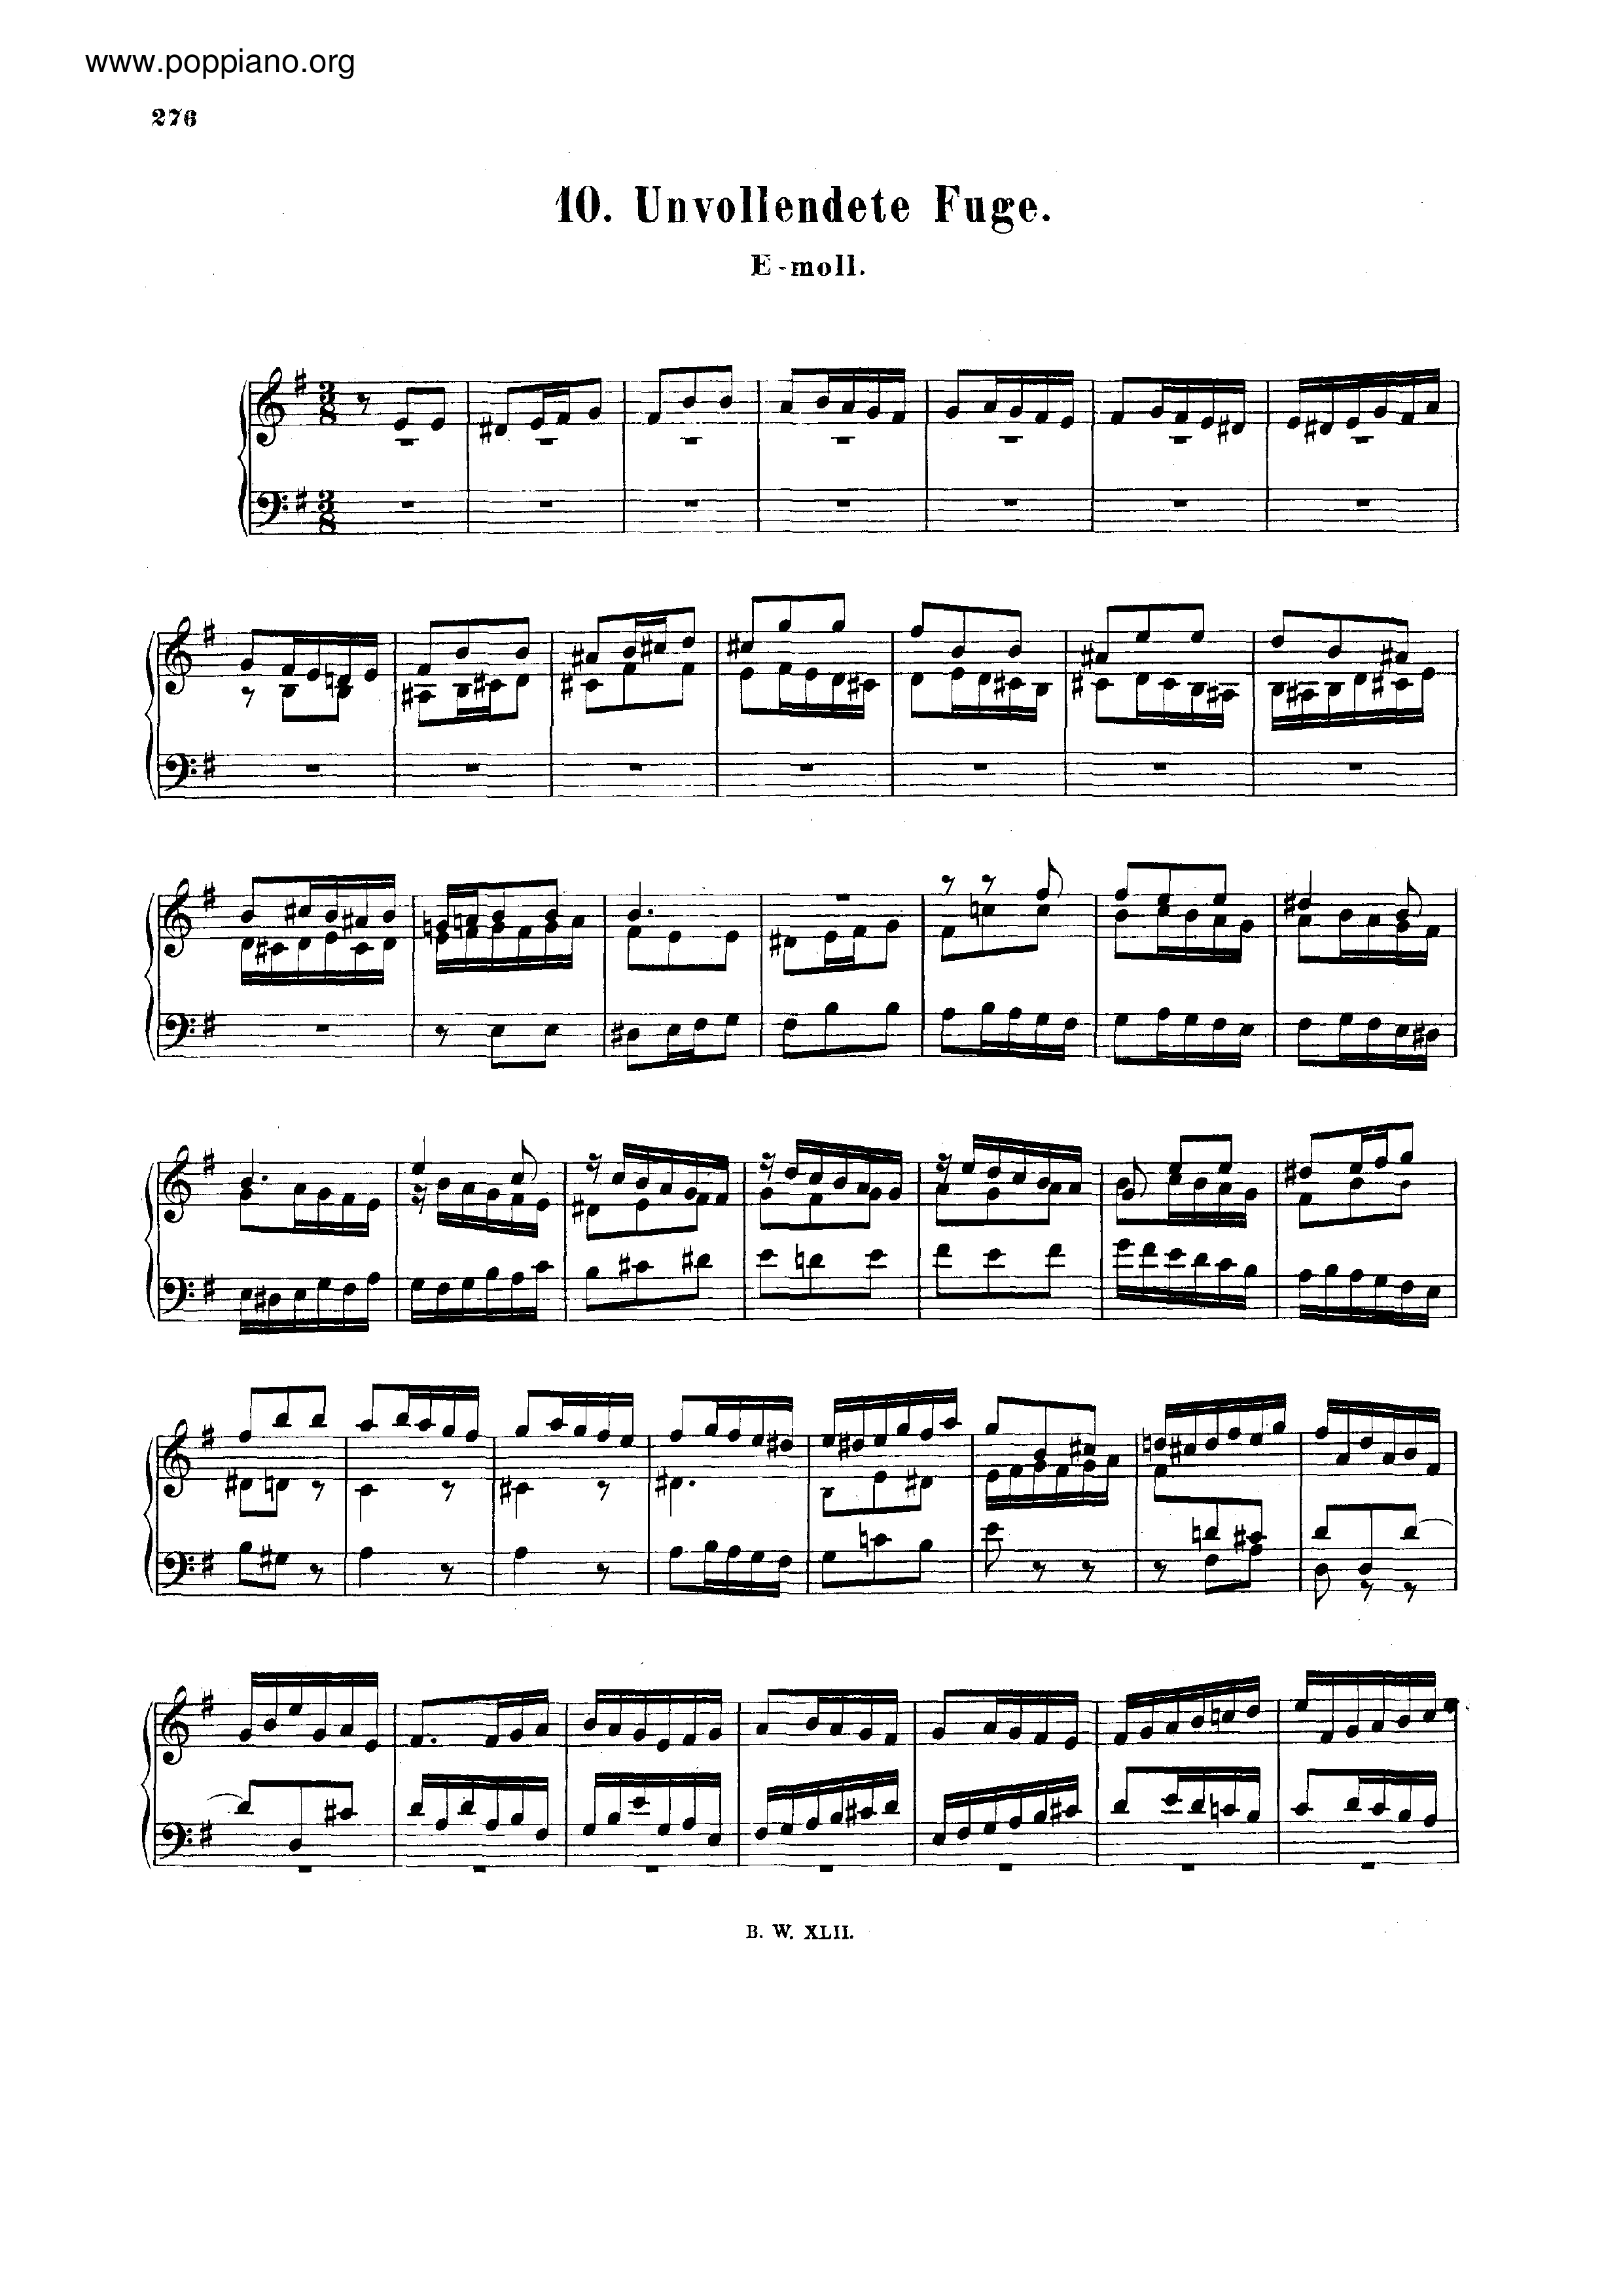 Fugue in e minor, BWV 960 (unfinished) Score